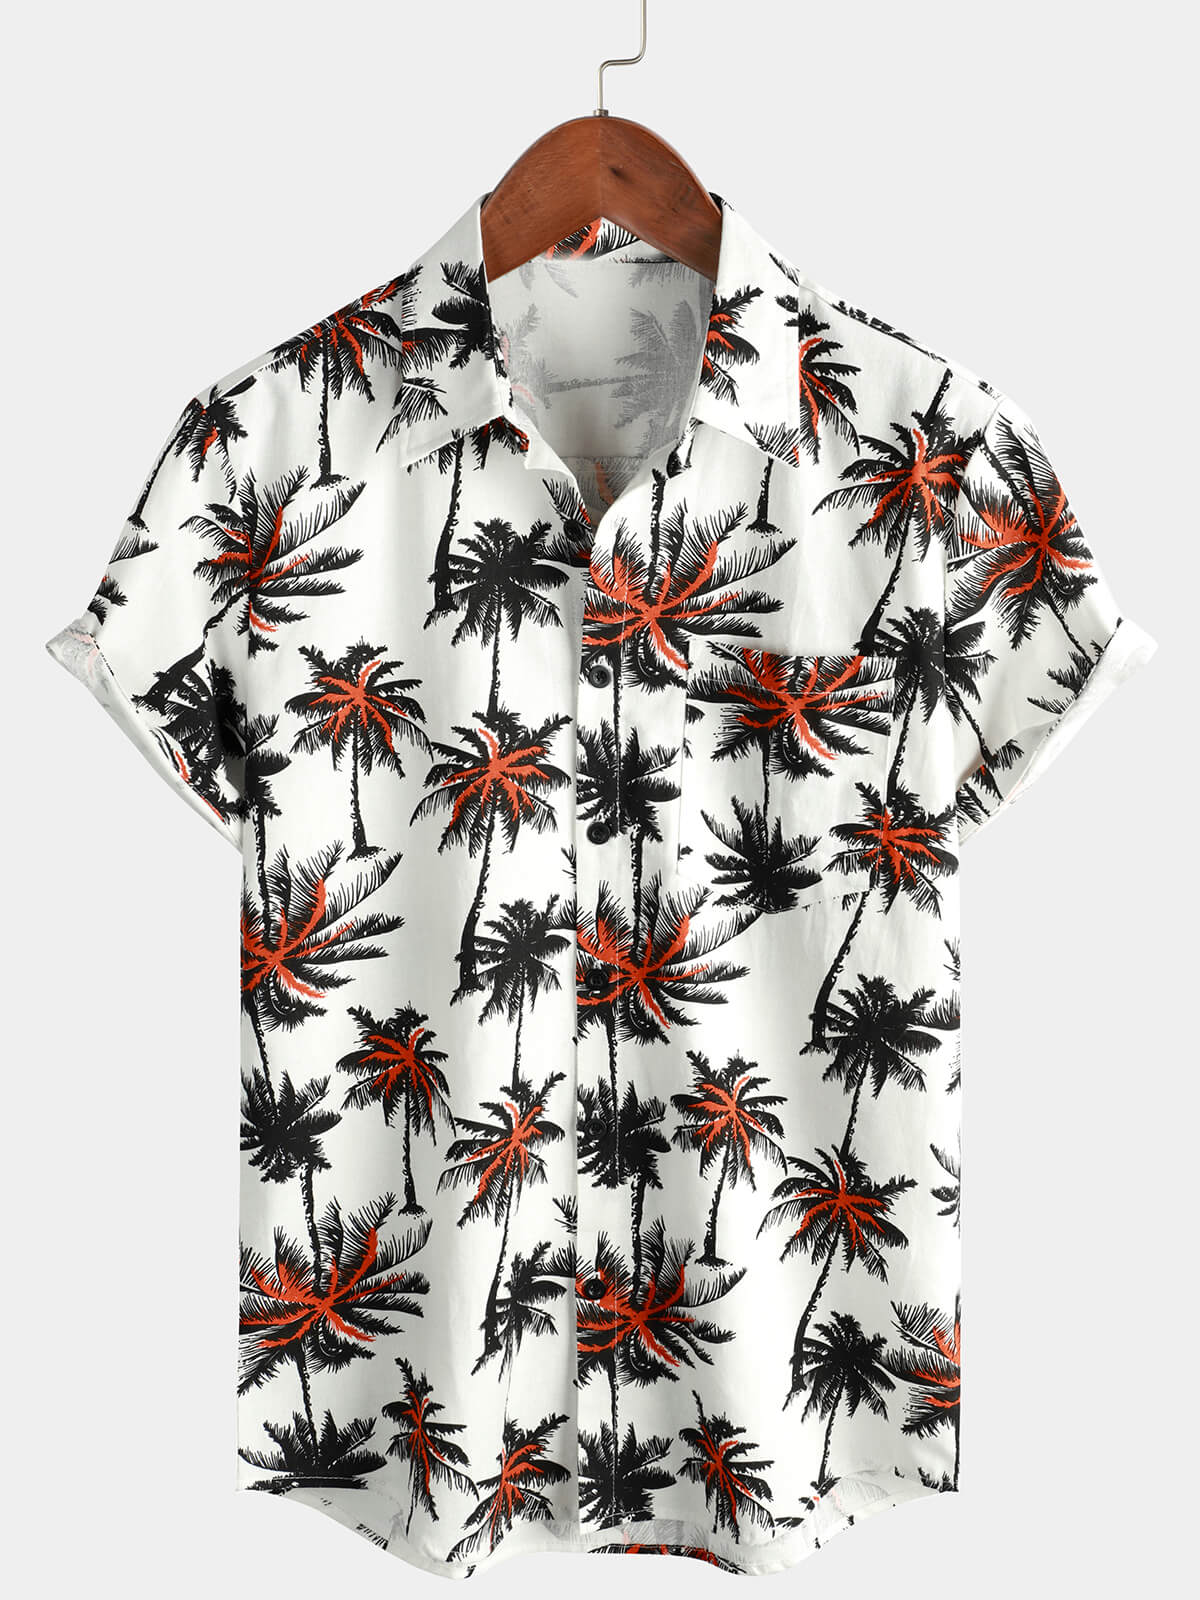 Men's Tropical Coconut Print Cotton Linen Button Up Short Sleeve Shirt